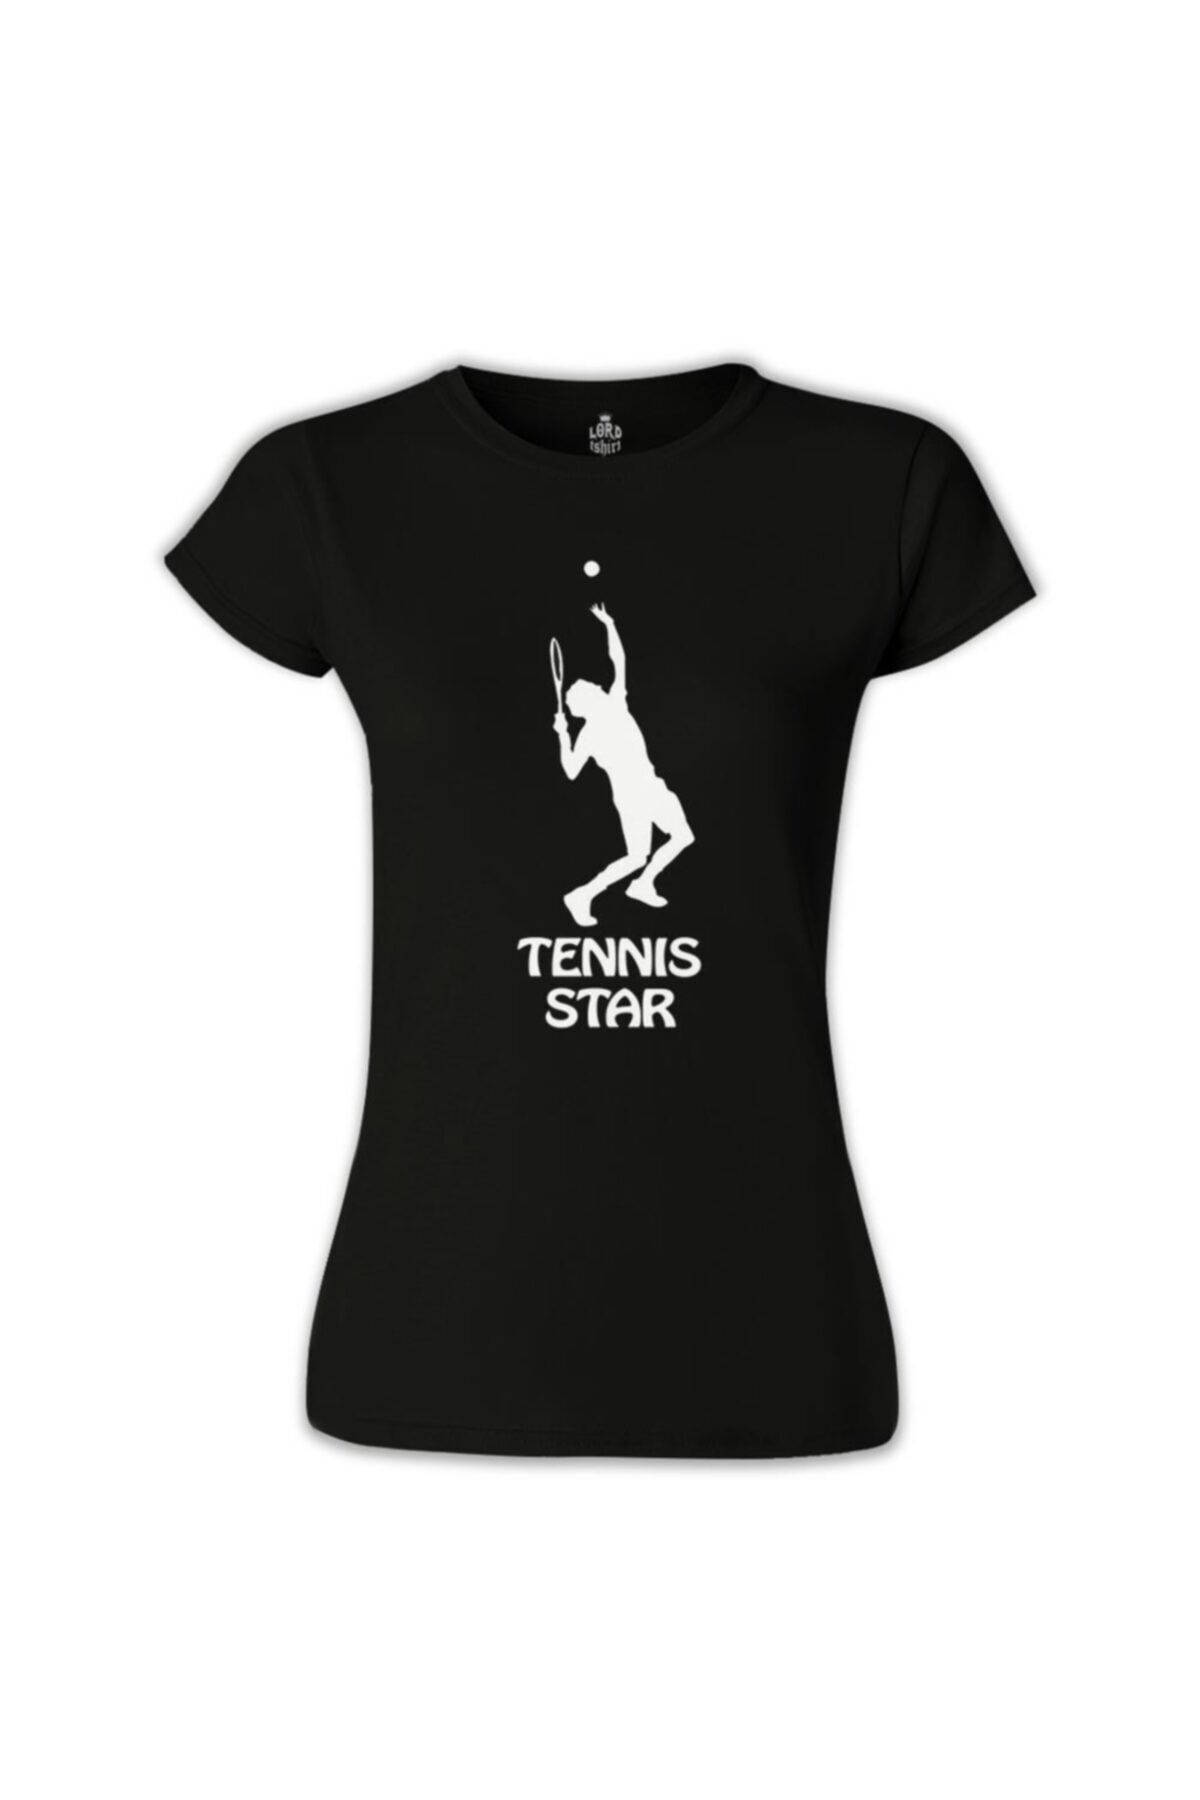 Lord T-Shirt Tenis Star Siyah Kadın  Tshirt